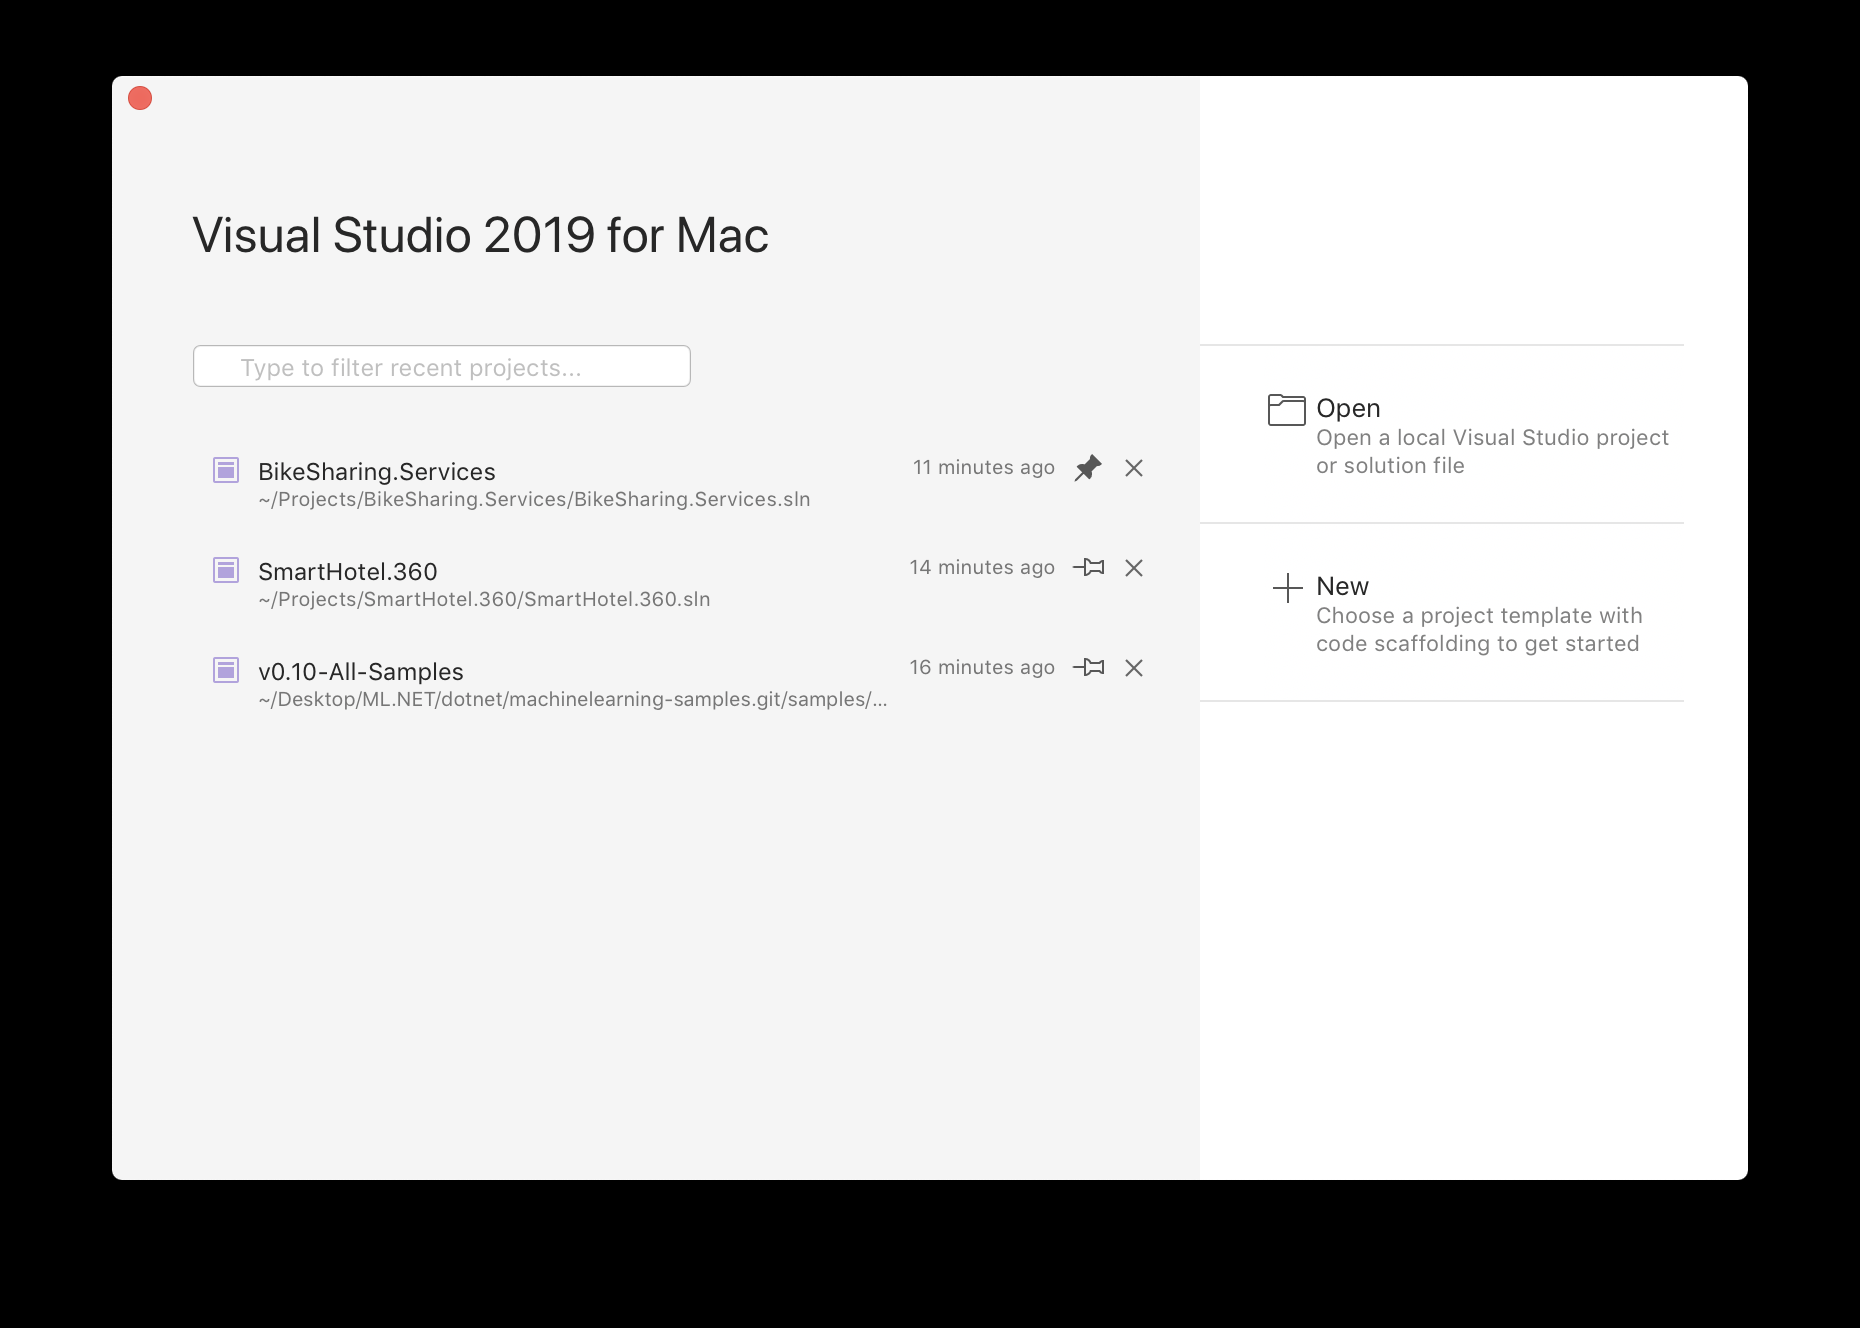 Visual Studio 2019 正式发布附下载地址 Win/Mac